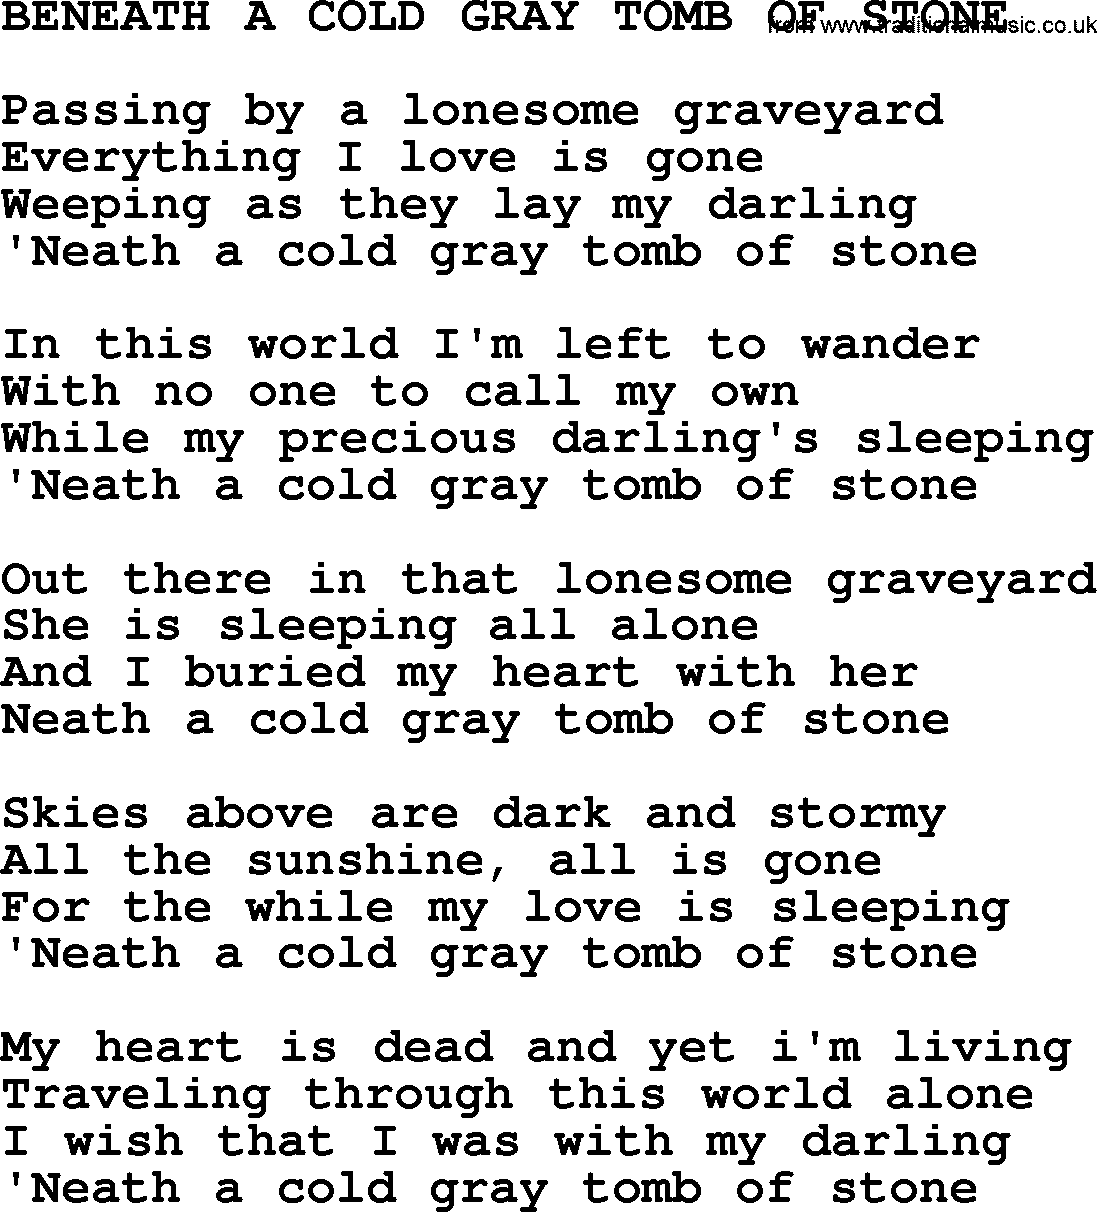 Hank Williams song Beneath A Cold Gray Tomb Of Stone, lyrics